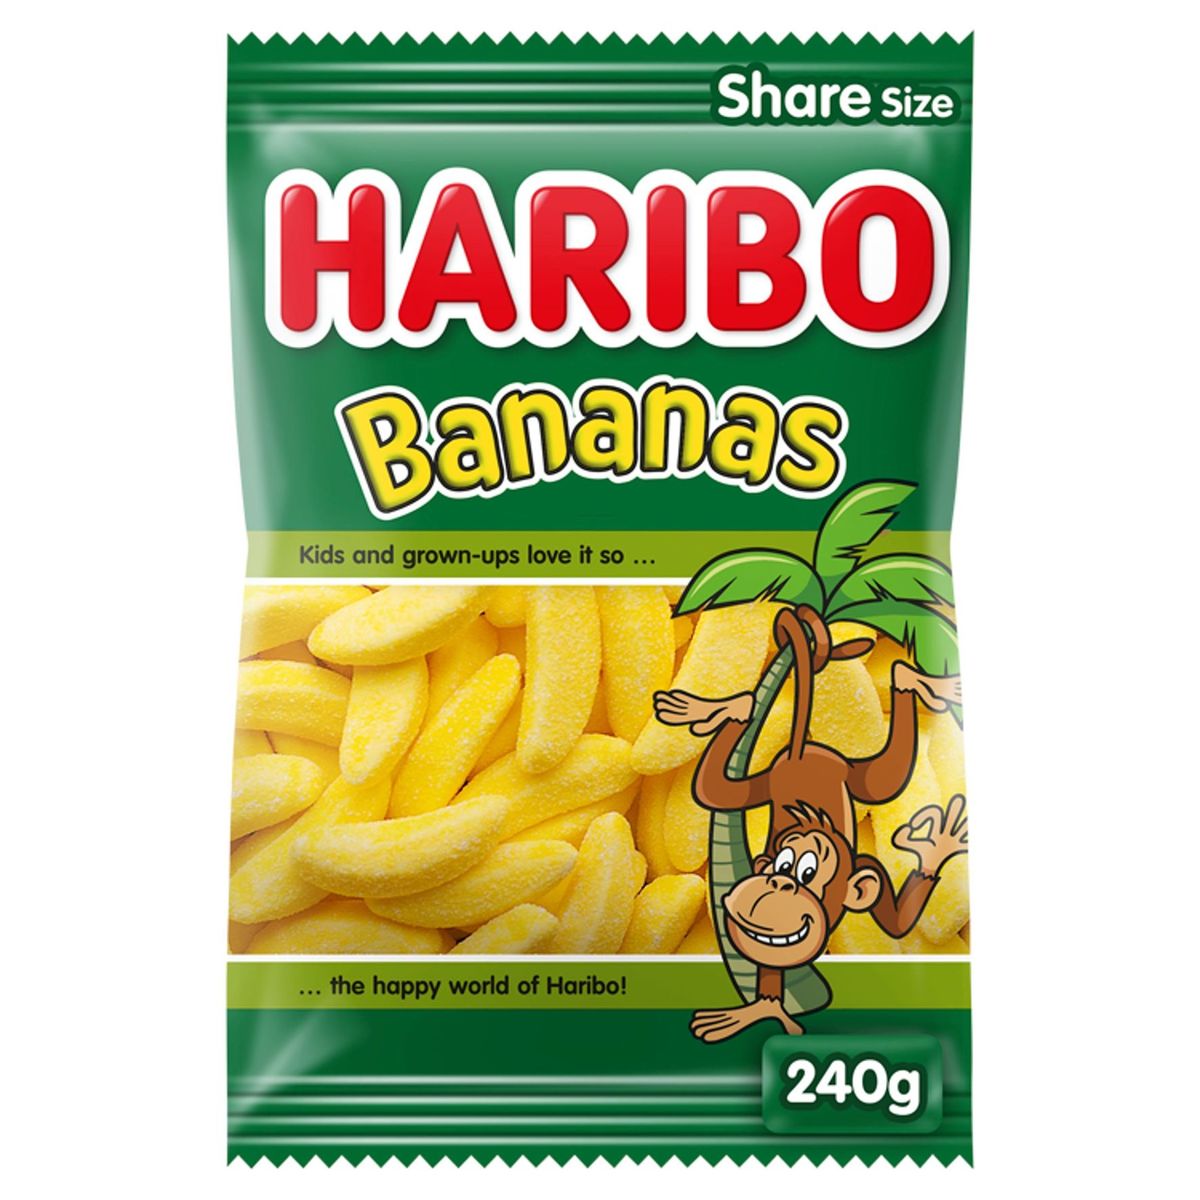 Haribo Bananas Share Size 240 g